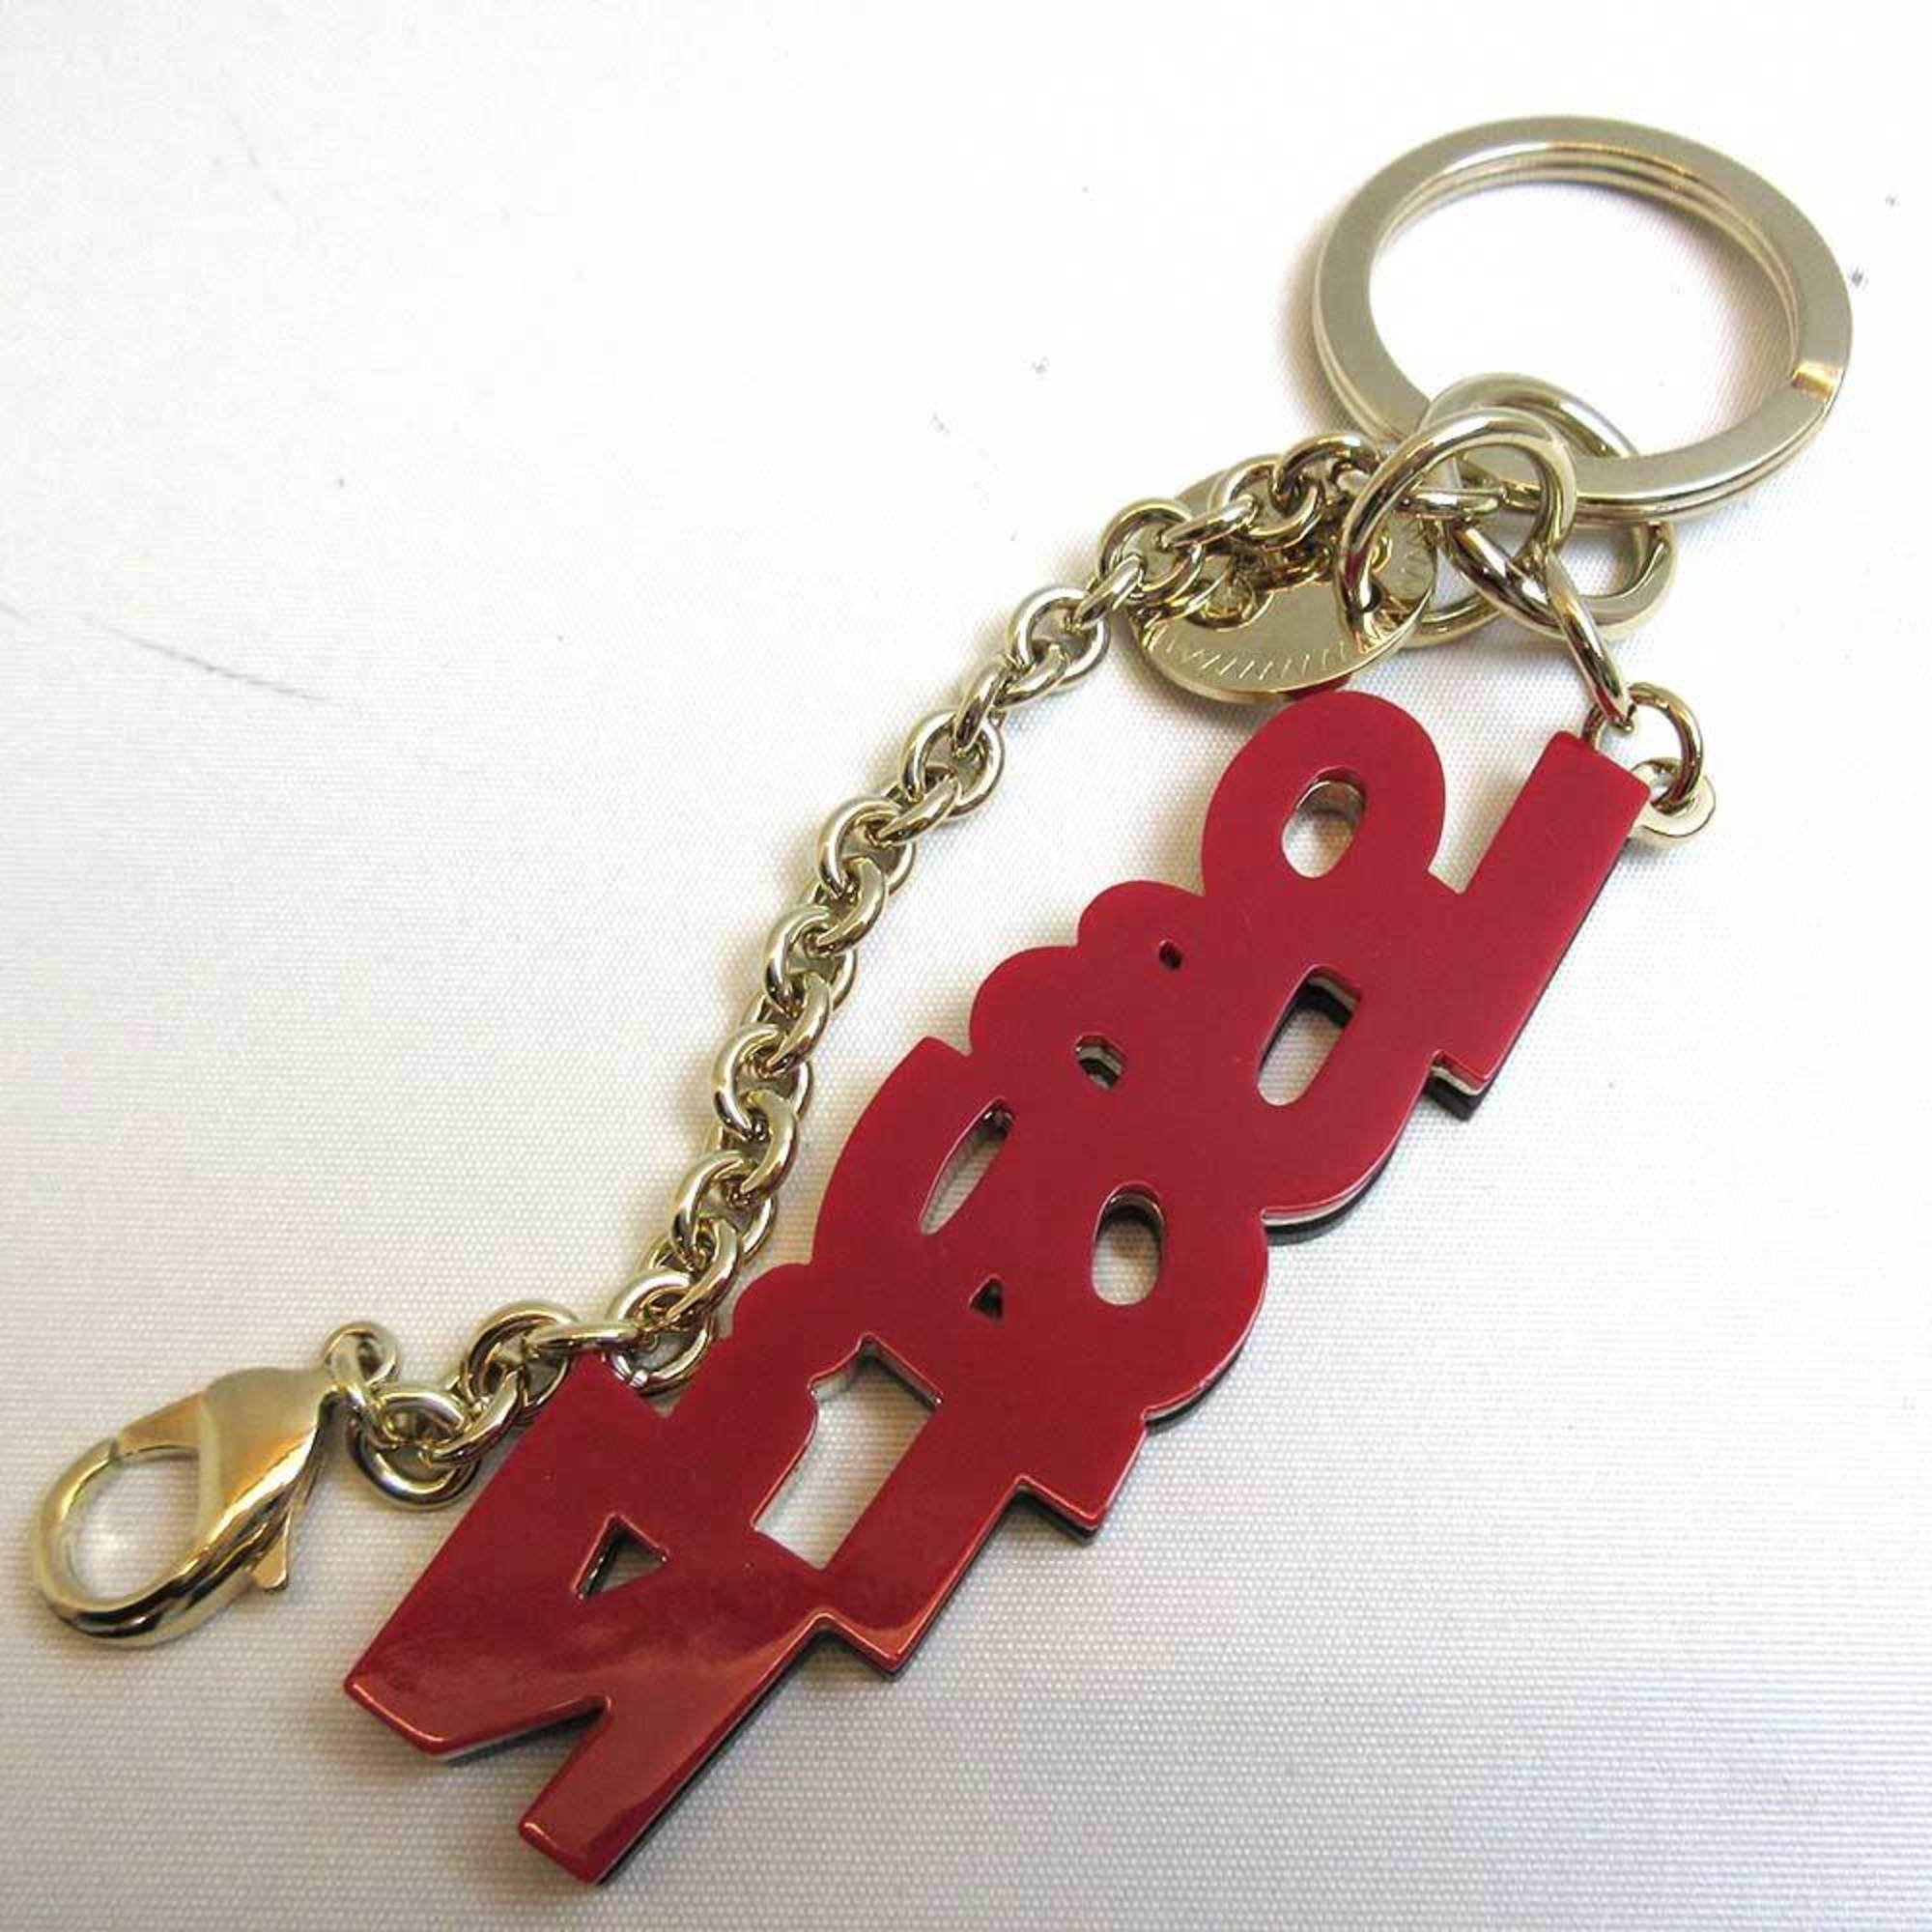 Christian Louboutin Accessories Bag Charm Key Ring Holder Red x Black Men Women Metal